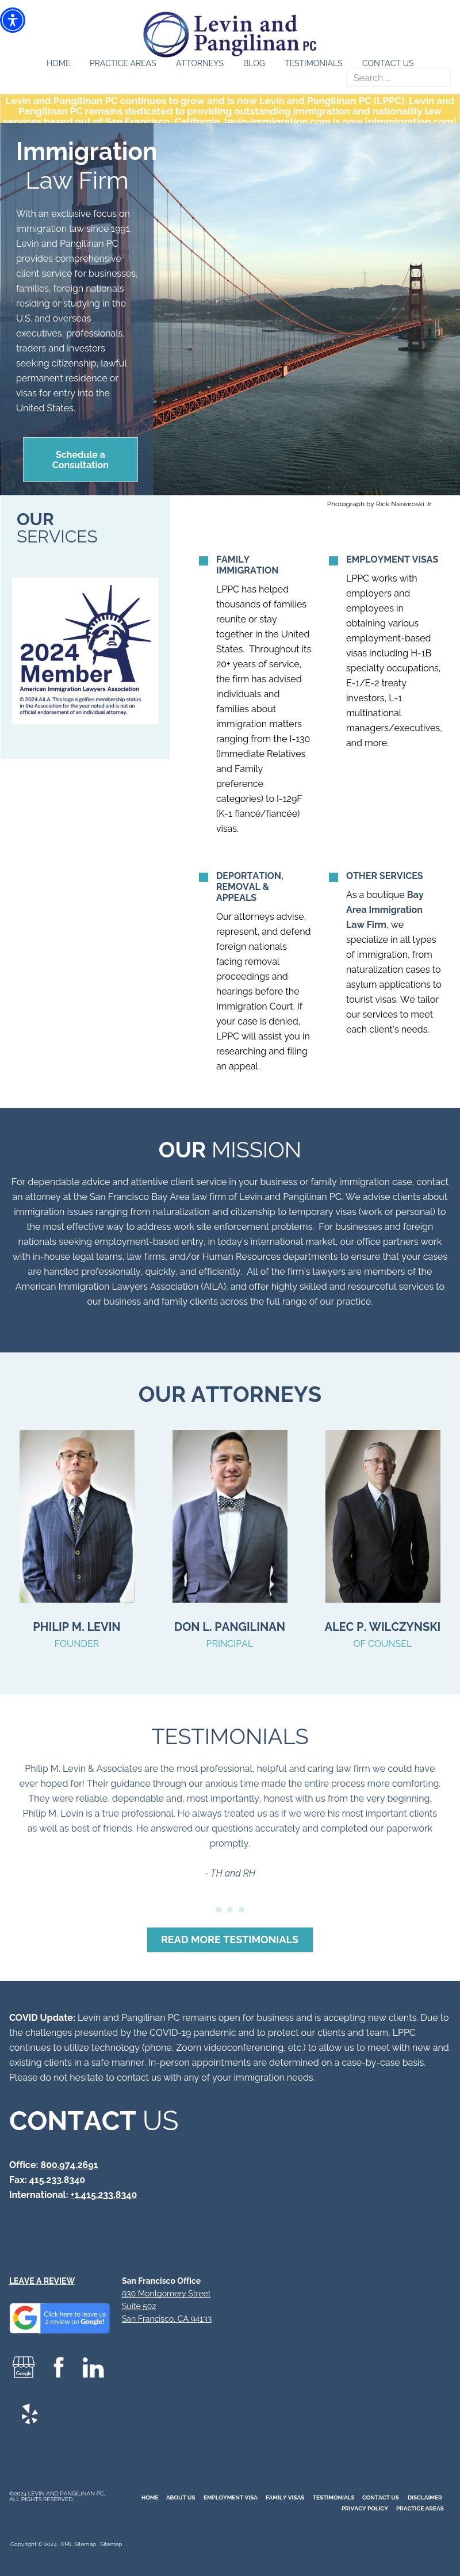 Philip Levin & Associates - San Francisco CA Lawyers